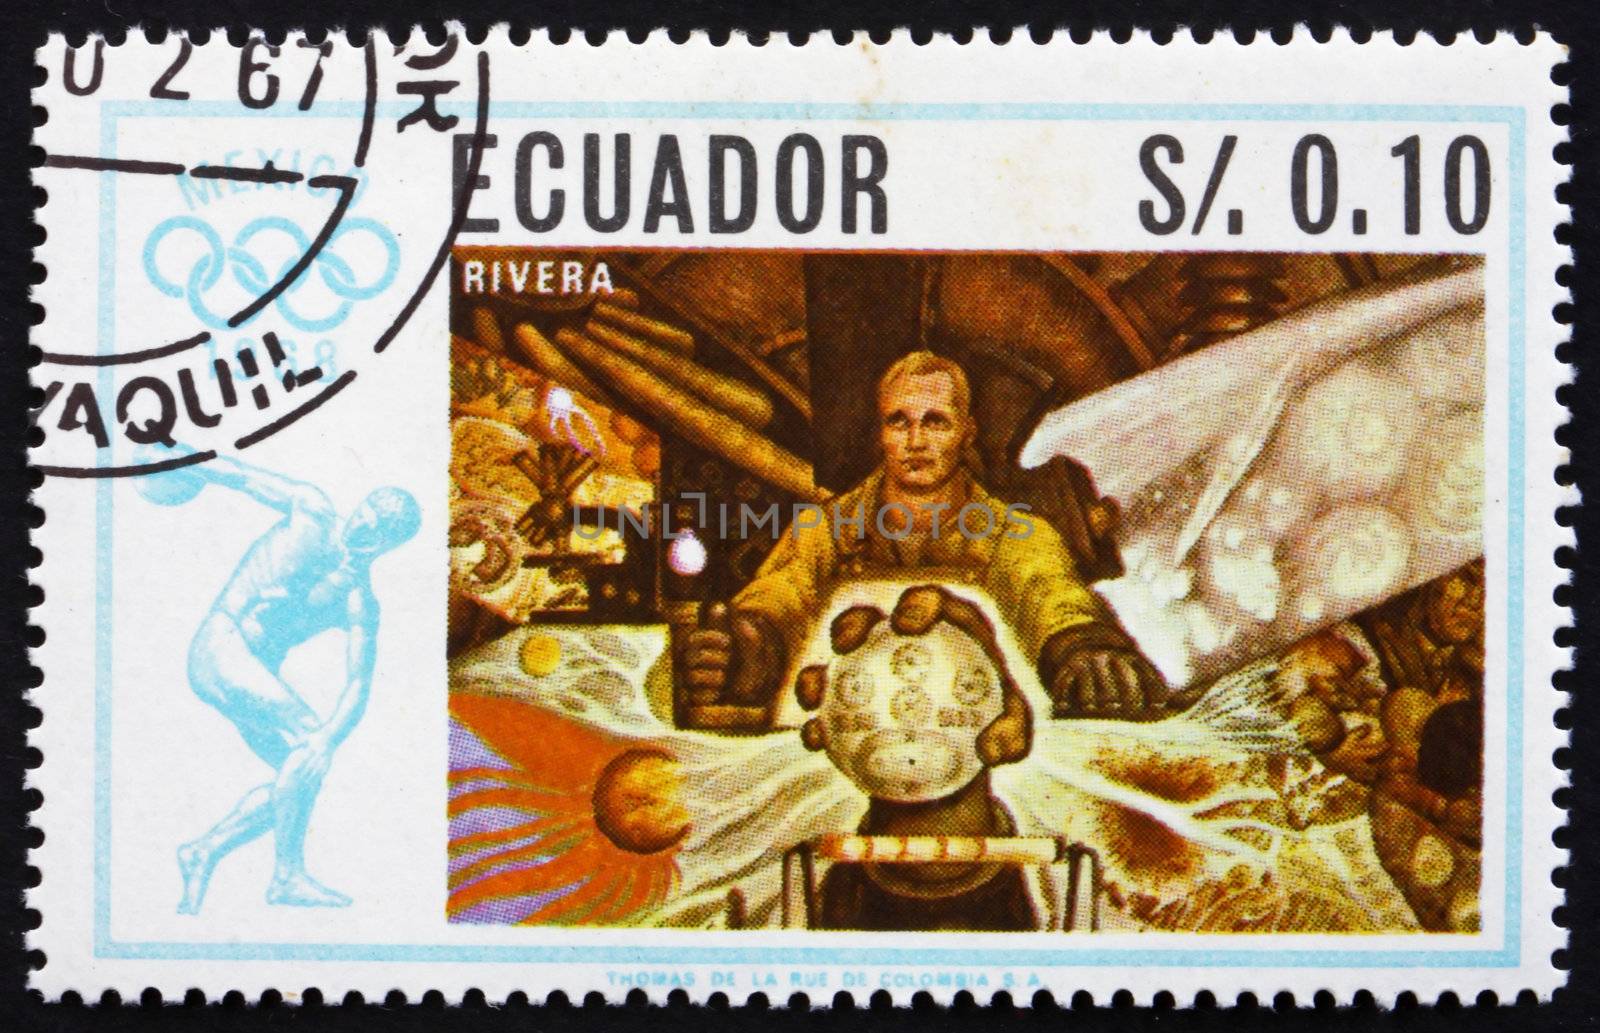 ECUADOR - CIRCA 1967: a stamp printed in the Ecuador shows Wanderer, Painting by Diego Rivera, Summer Olympics, Mexico City 68, circa 1967